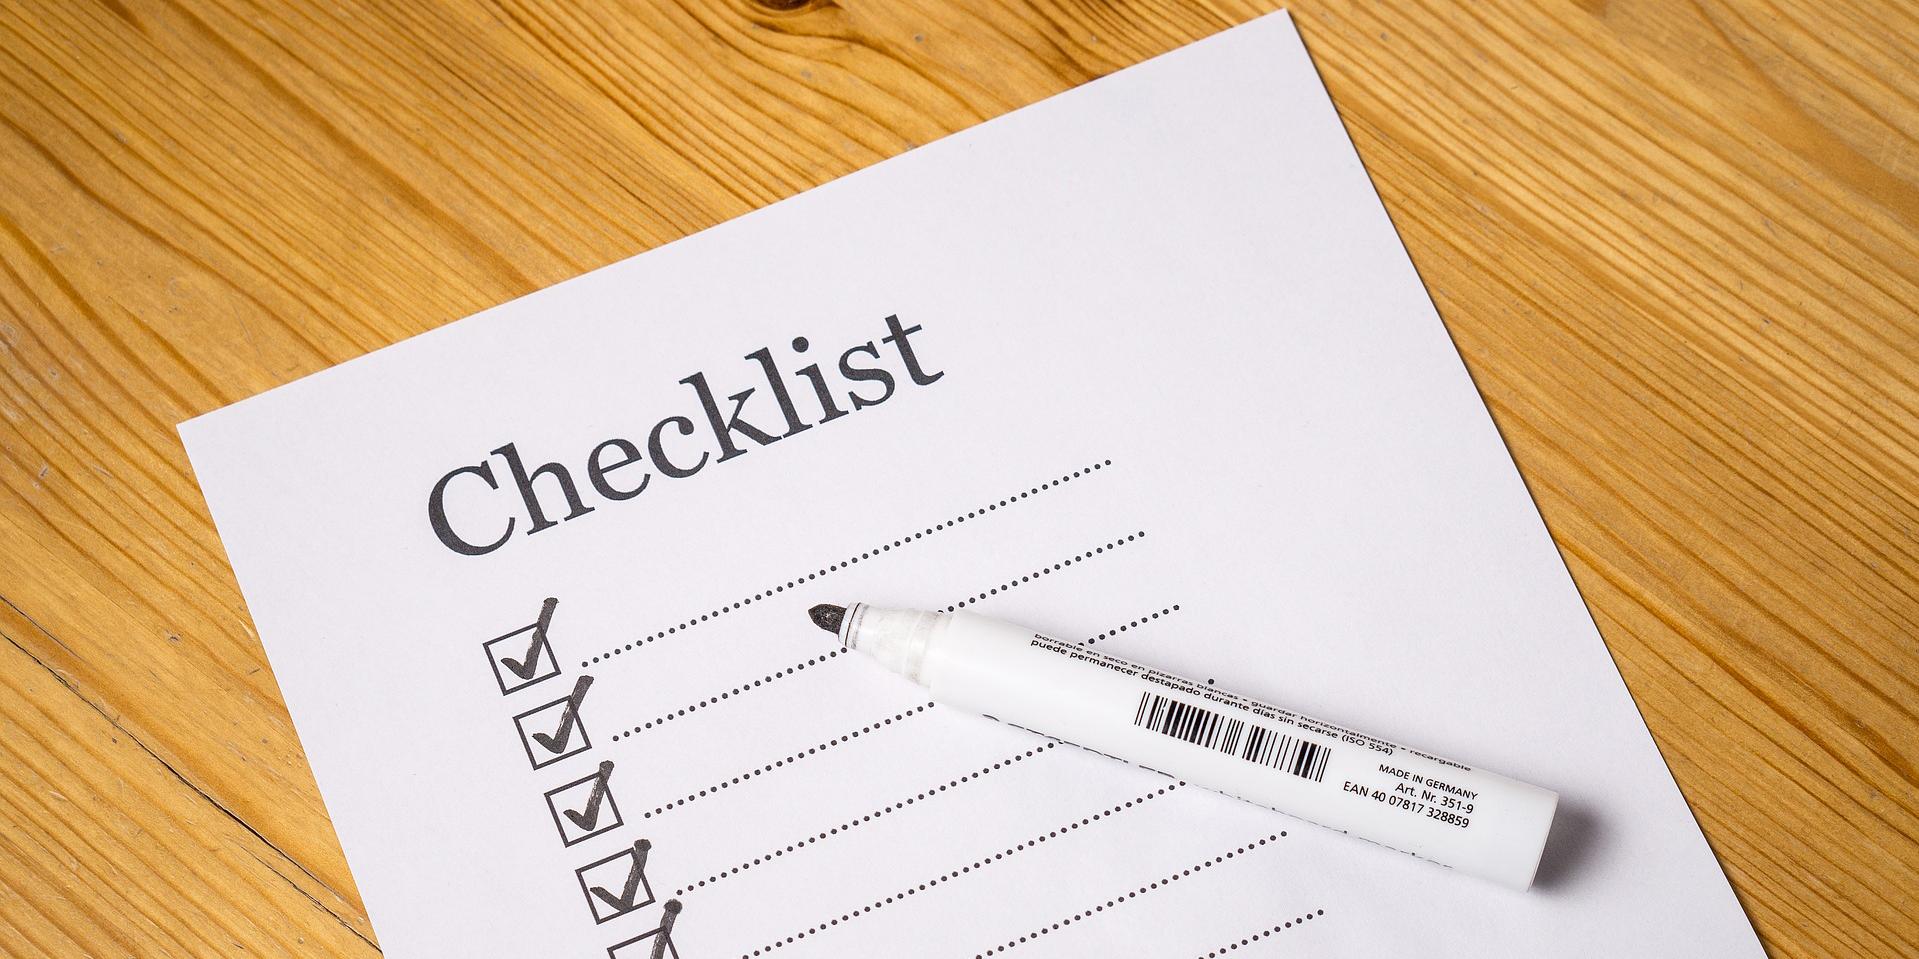 Checklist - quality management with LABC